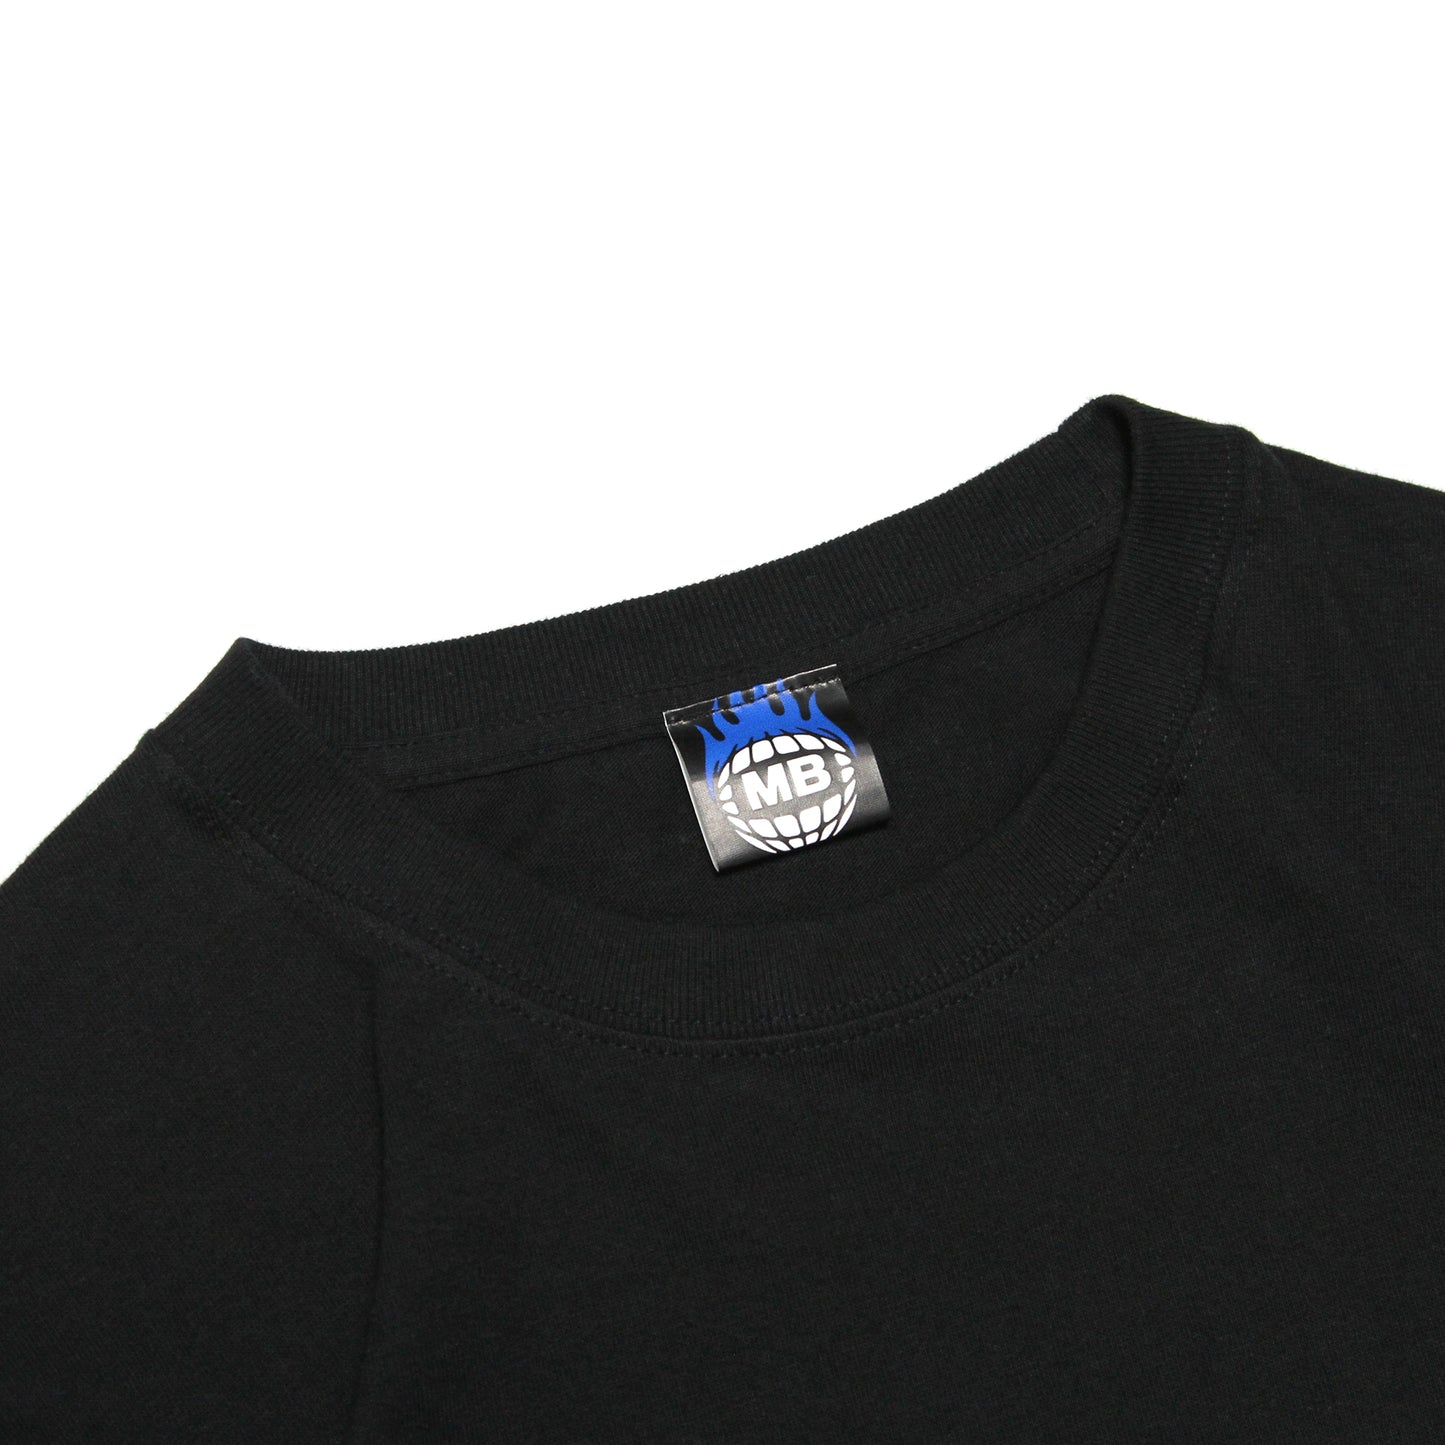 MOTO-BUNKA X BURN SLOW - Collab Logo T-Shirt/Black